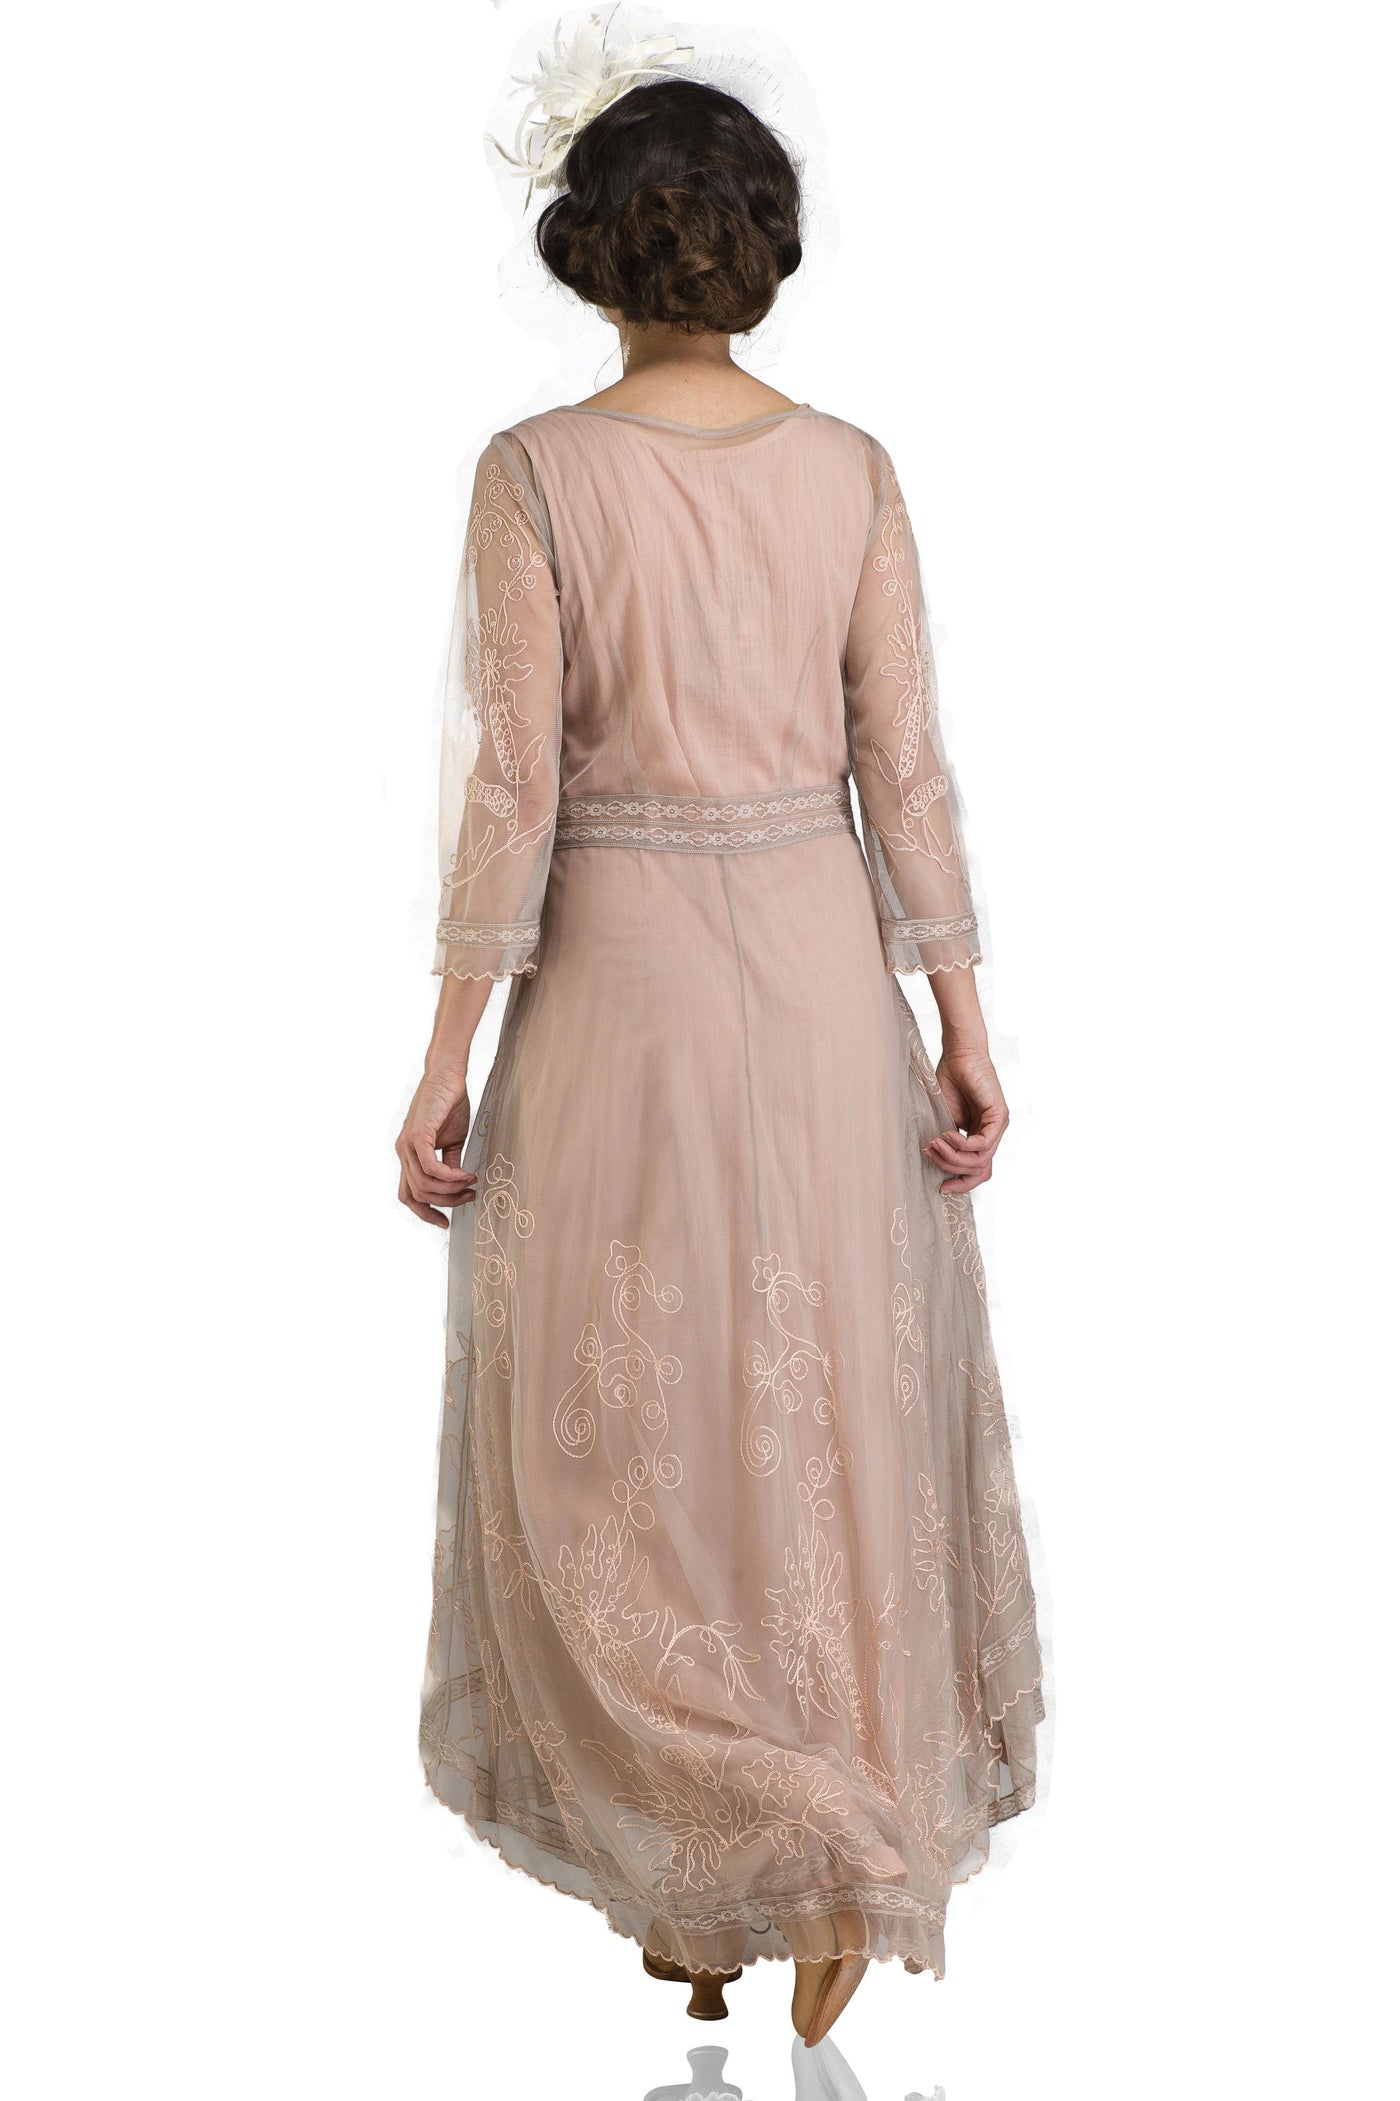 Victorian Dress in Quartz